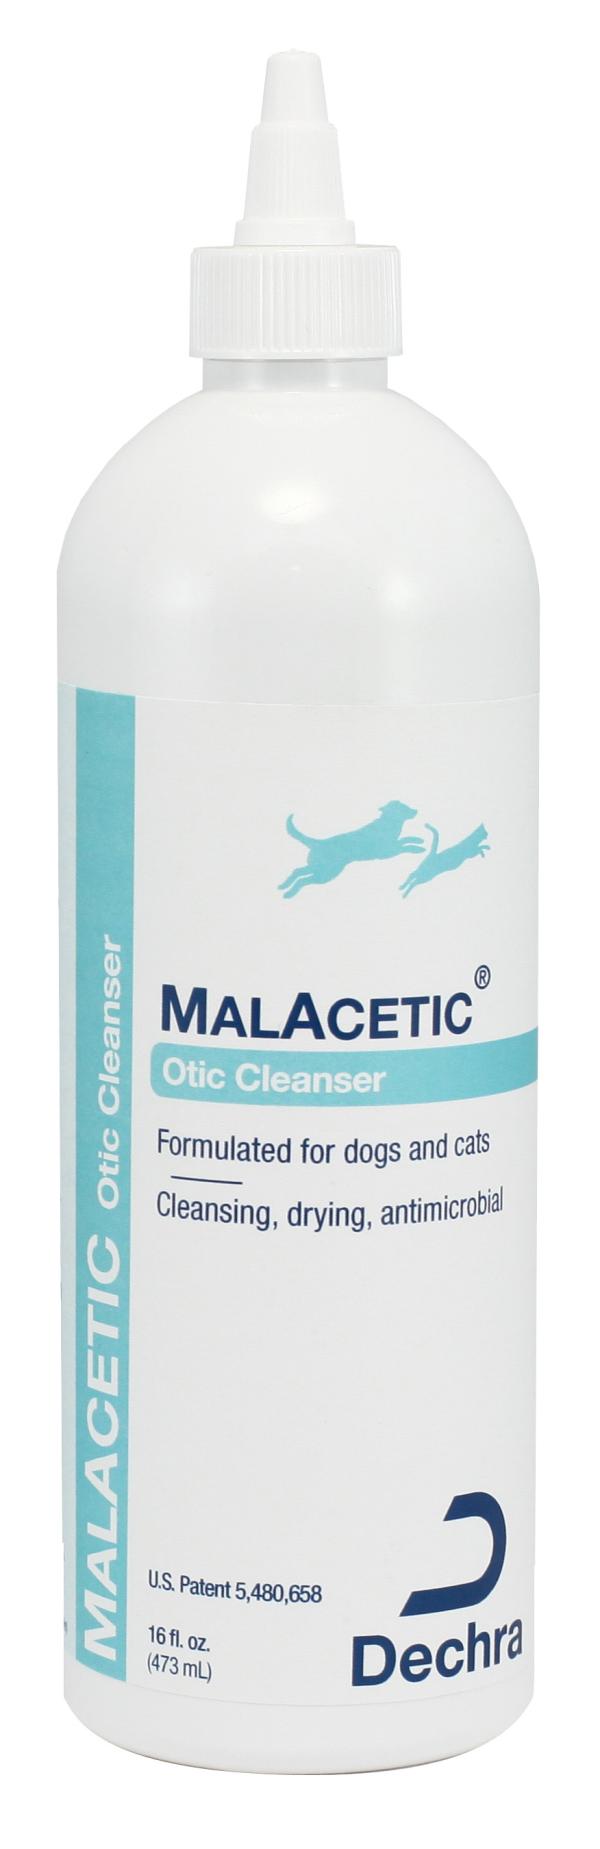 Malacetic Otic Cleanser